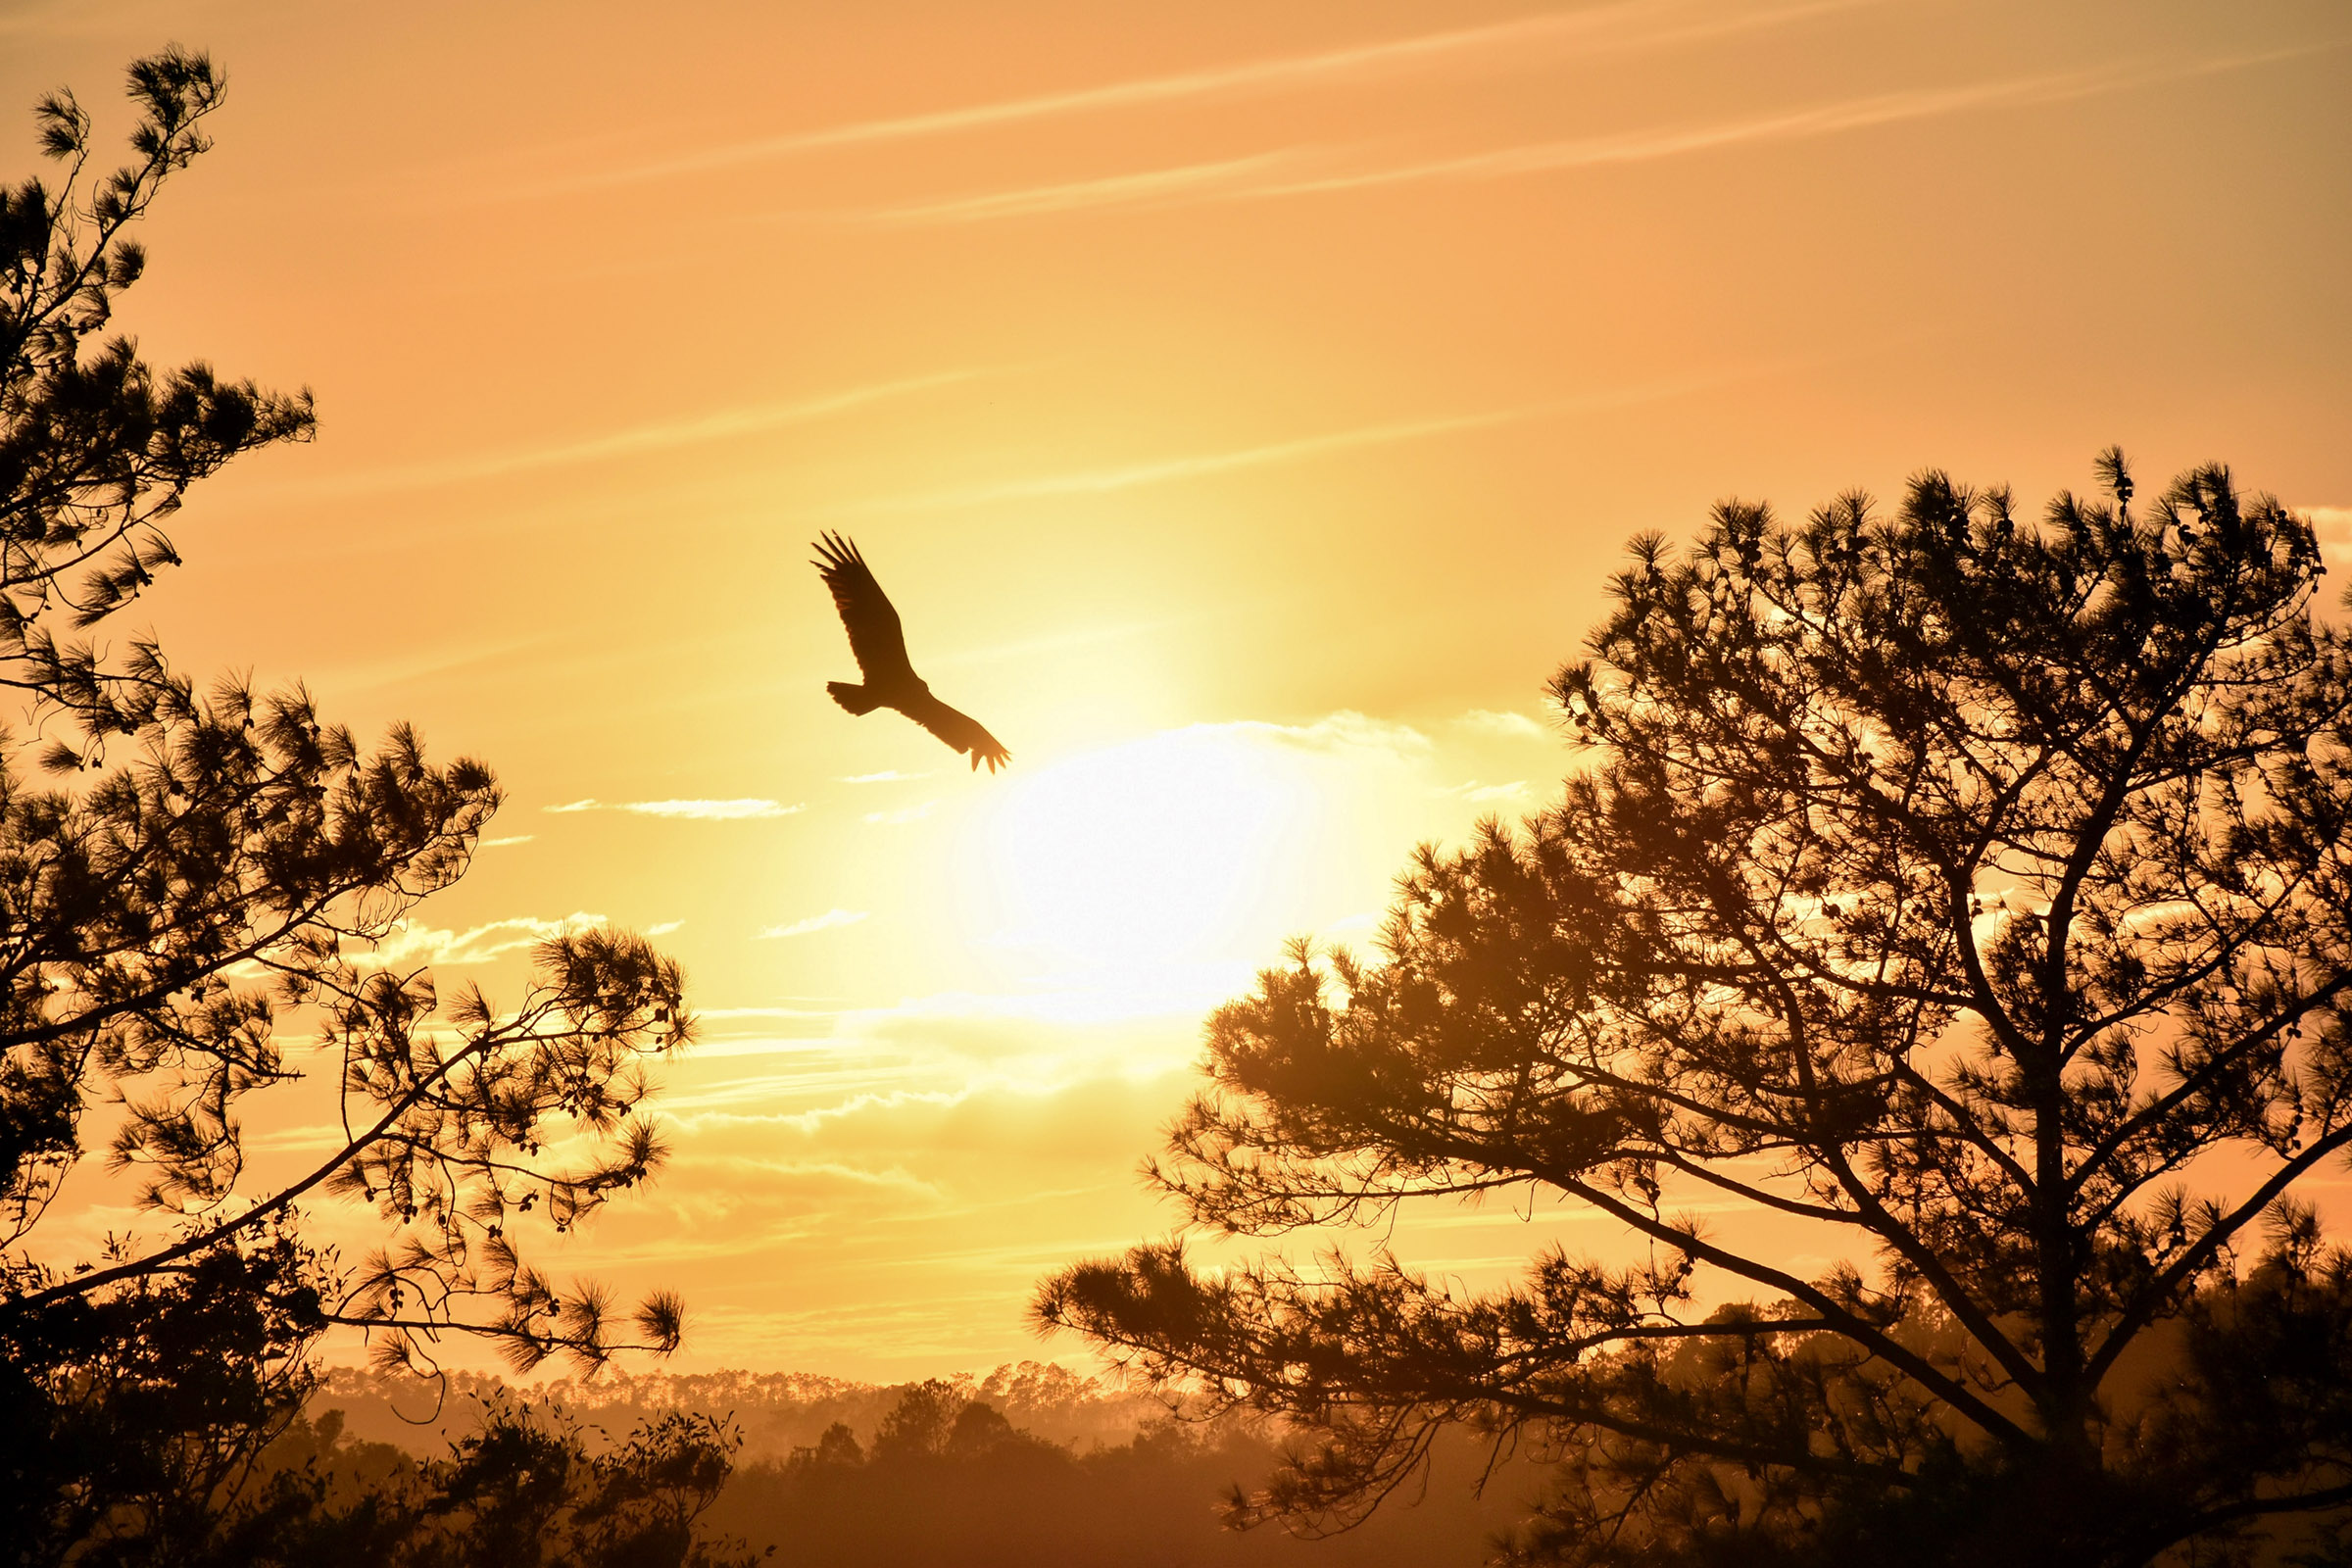 Eagle free at sunset